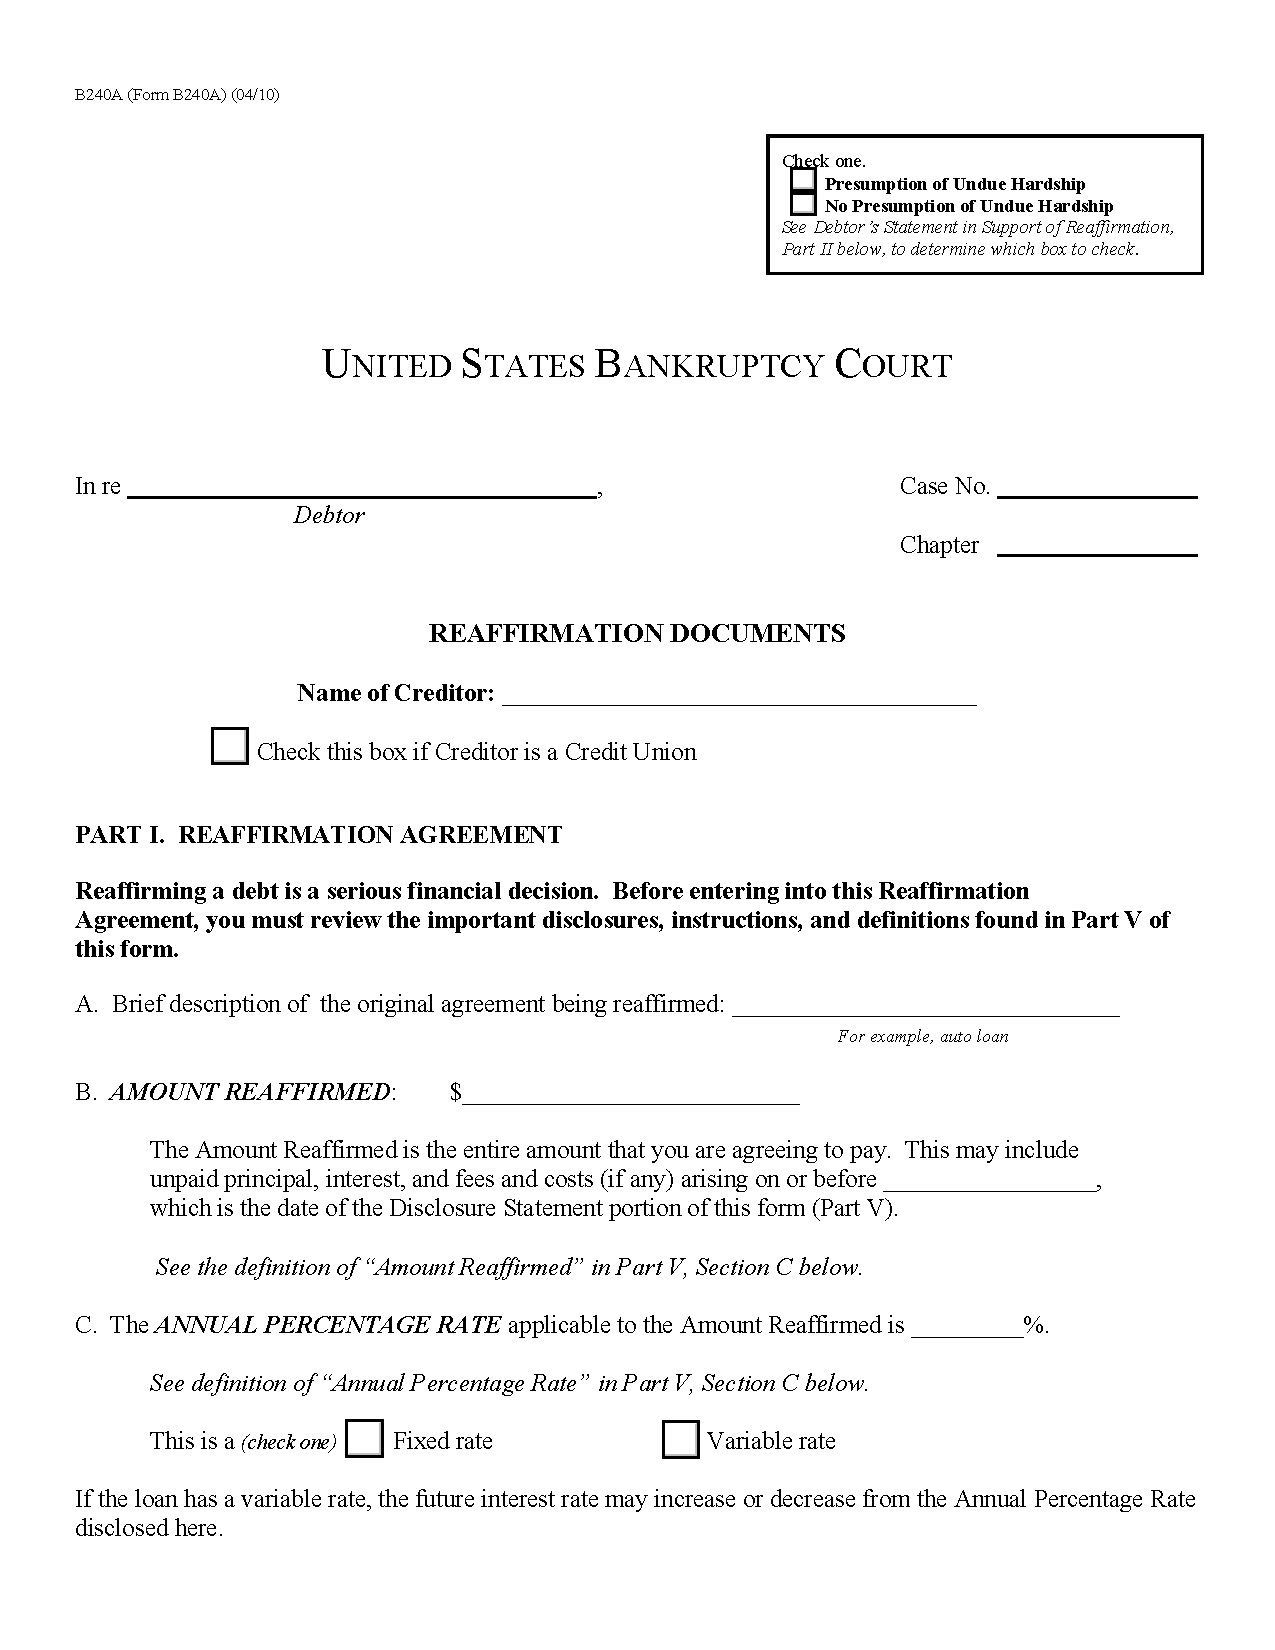 Form B 240A Reaffirmation Documents (4/10)